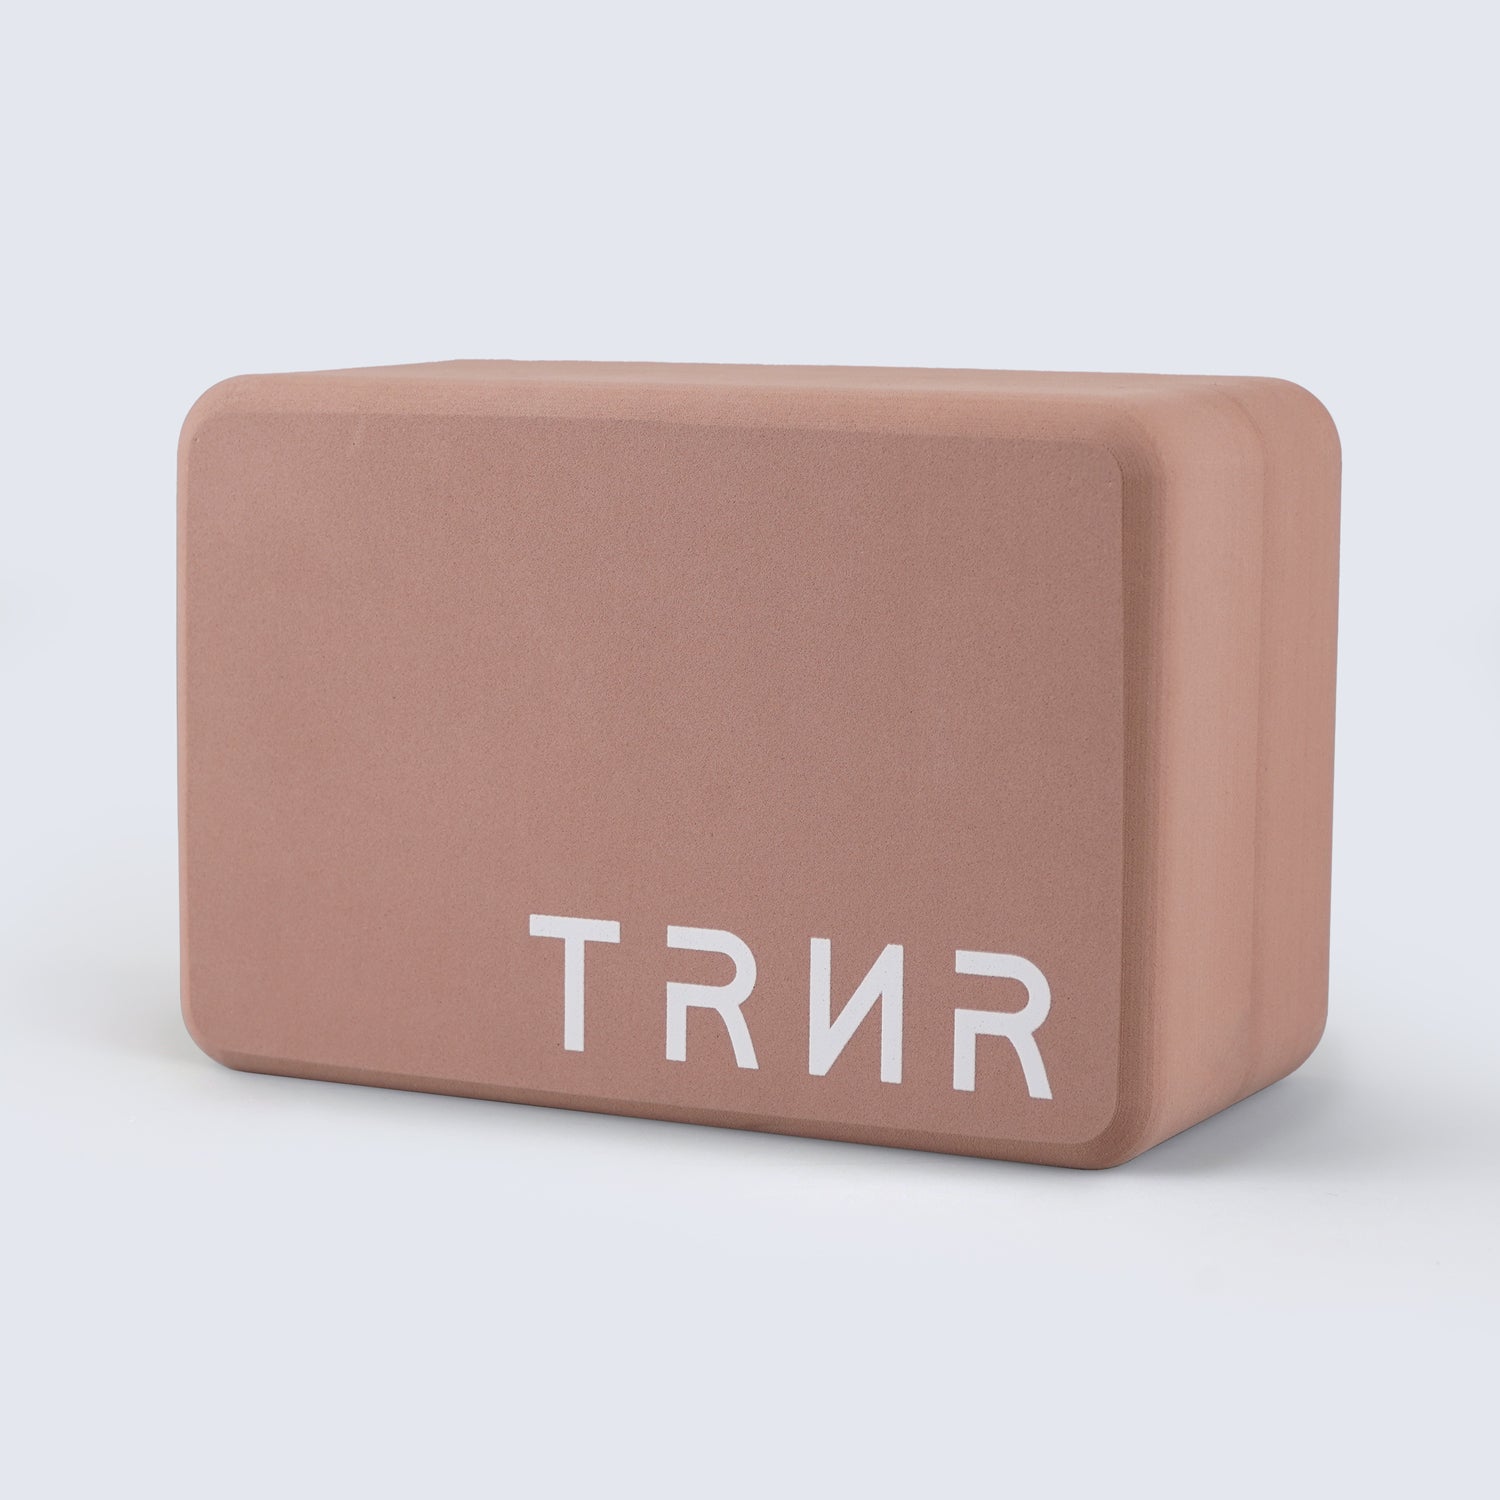 TRNR Elevate Block | High-Density EVA Foam | Clay Colour | Product Overview Featuring TRNR Logo Inscription